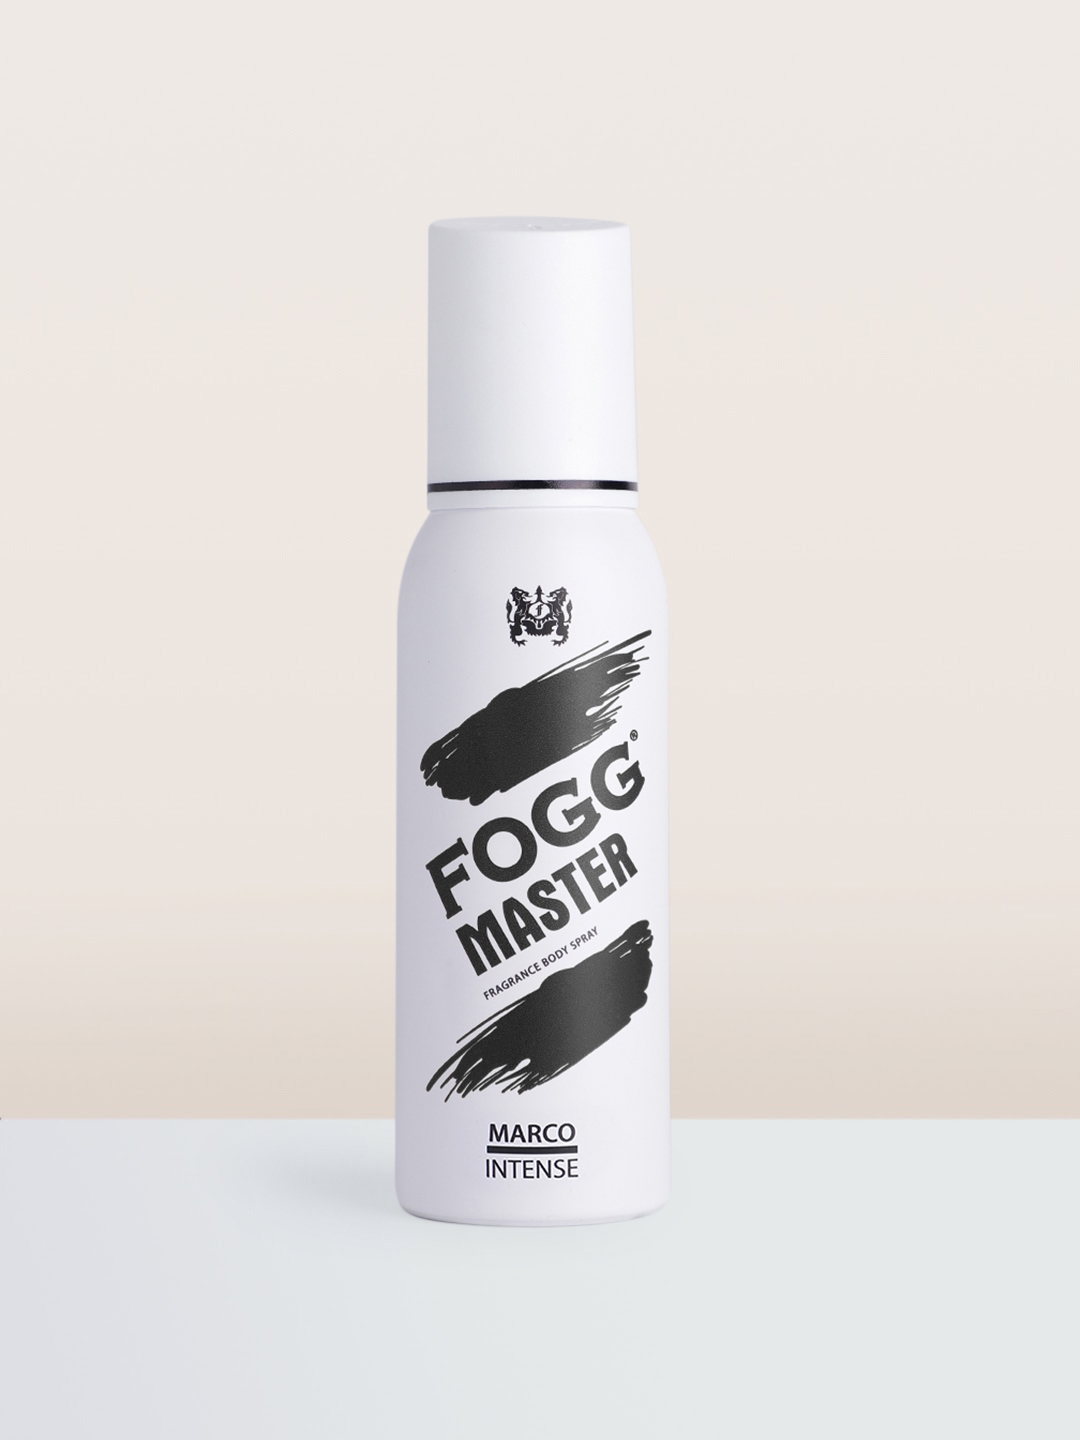 Fogg Master Men Intense Marco Deodorant 120 ml